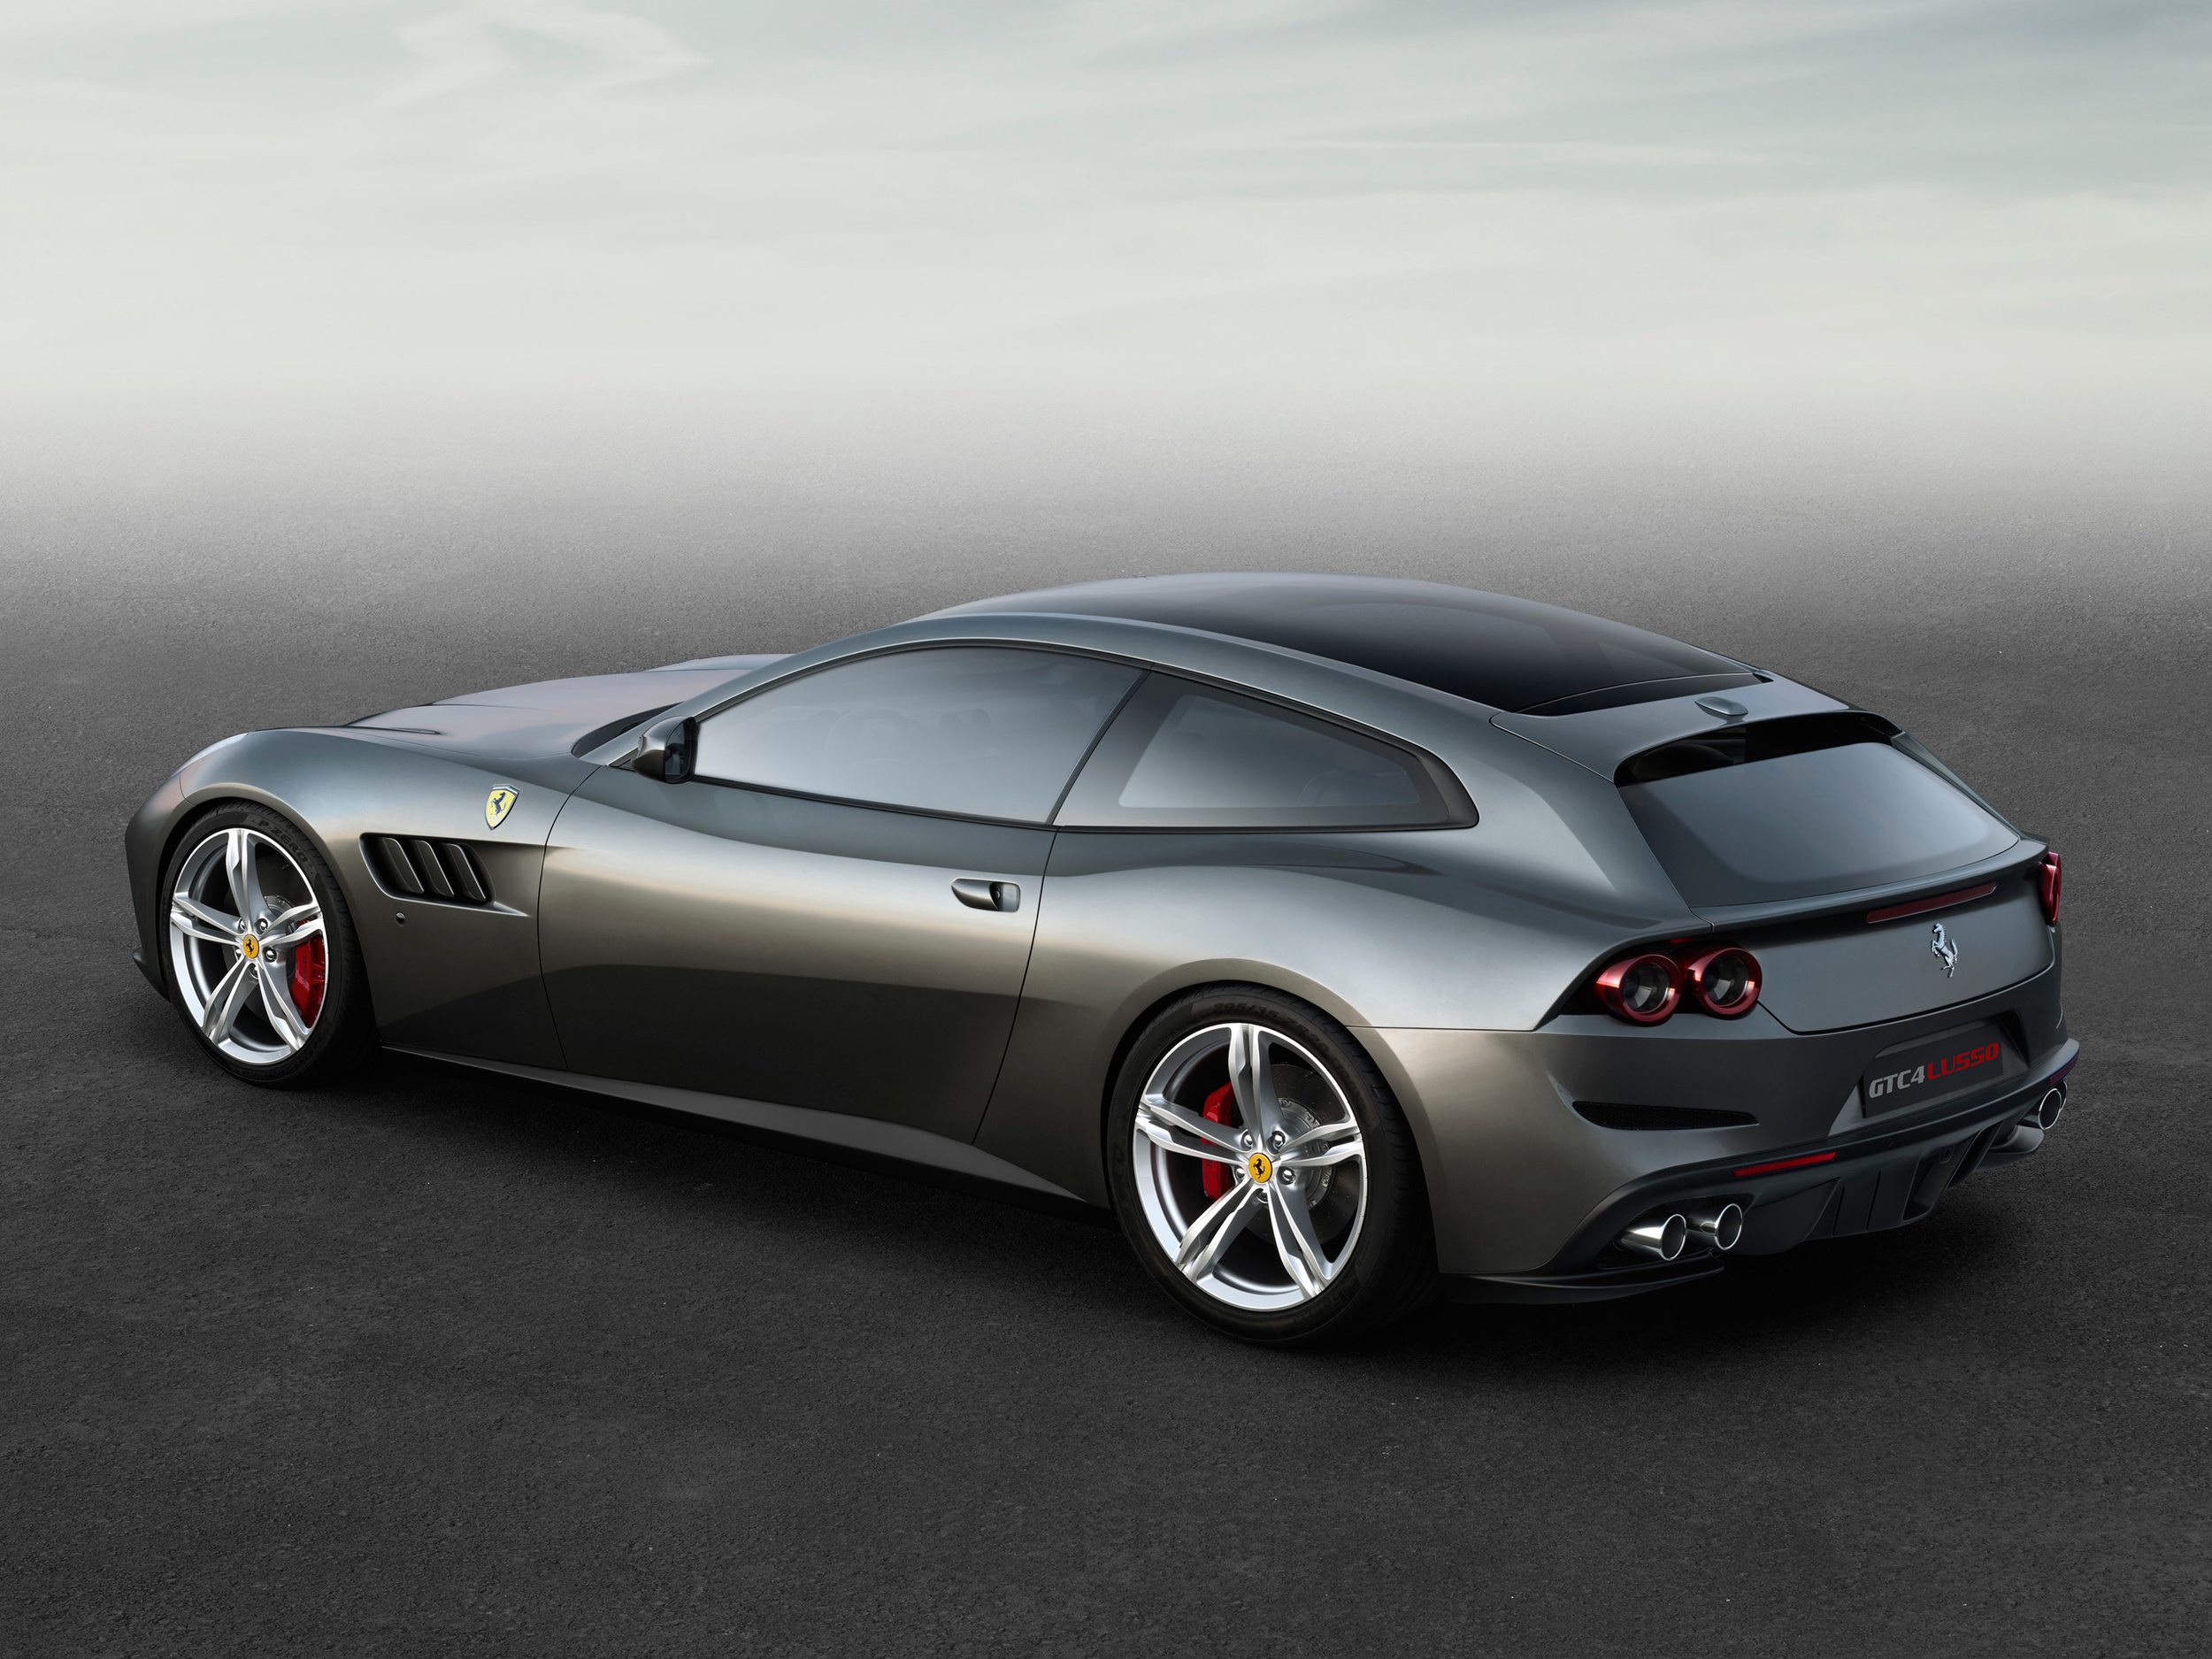 Ferrari_GTC4Lusso_side_r_high_LR.jpg